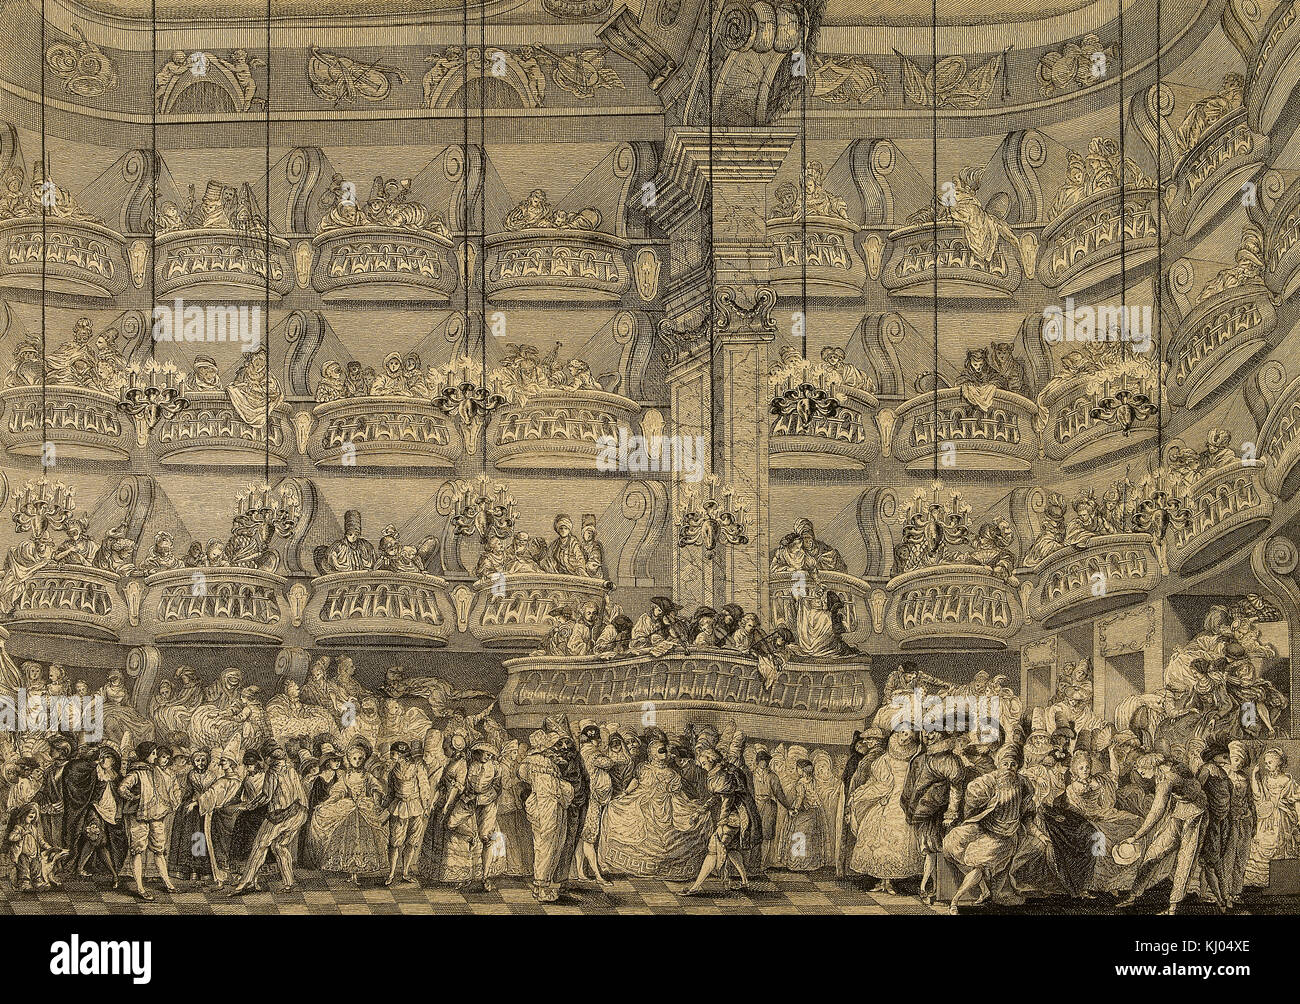 Espagne. Madrid. Danse des masques donnés au Teatro del Príncipe, 1770. Gravure de Juan Antonio Salvador Carmona y García (1740-1805) avant une peinture de Luis Paret y Alcazar (1746-1799). Banque D'Images